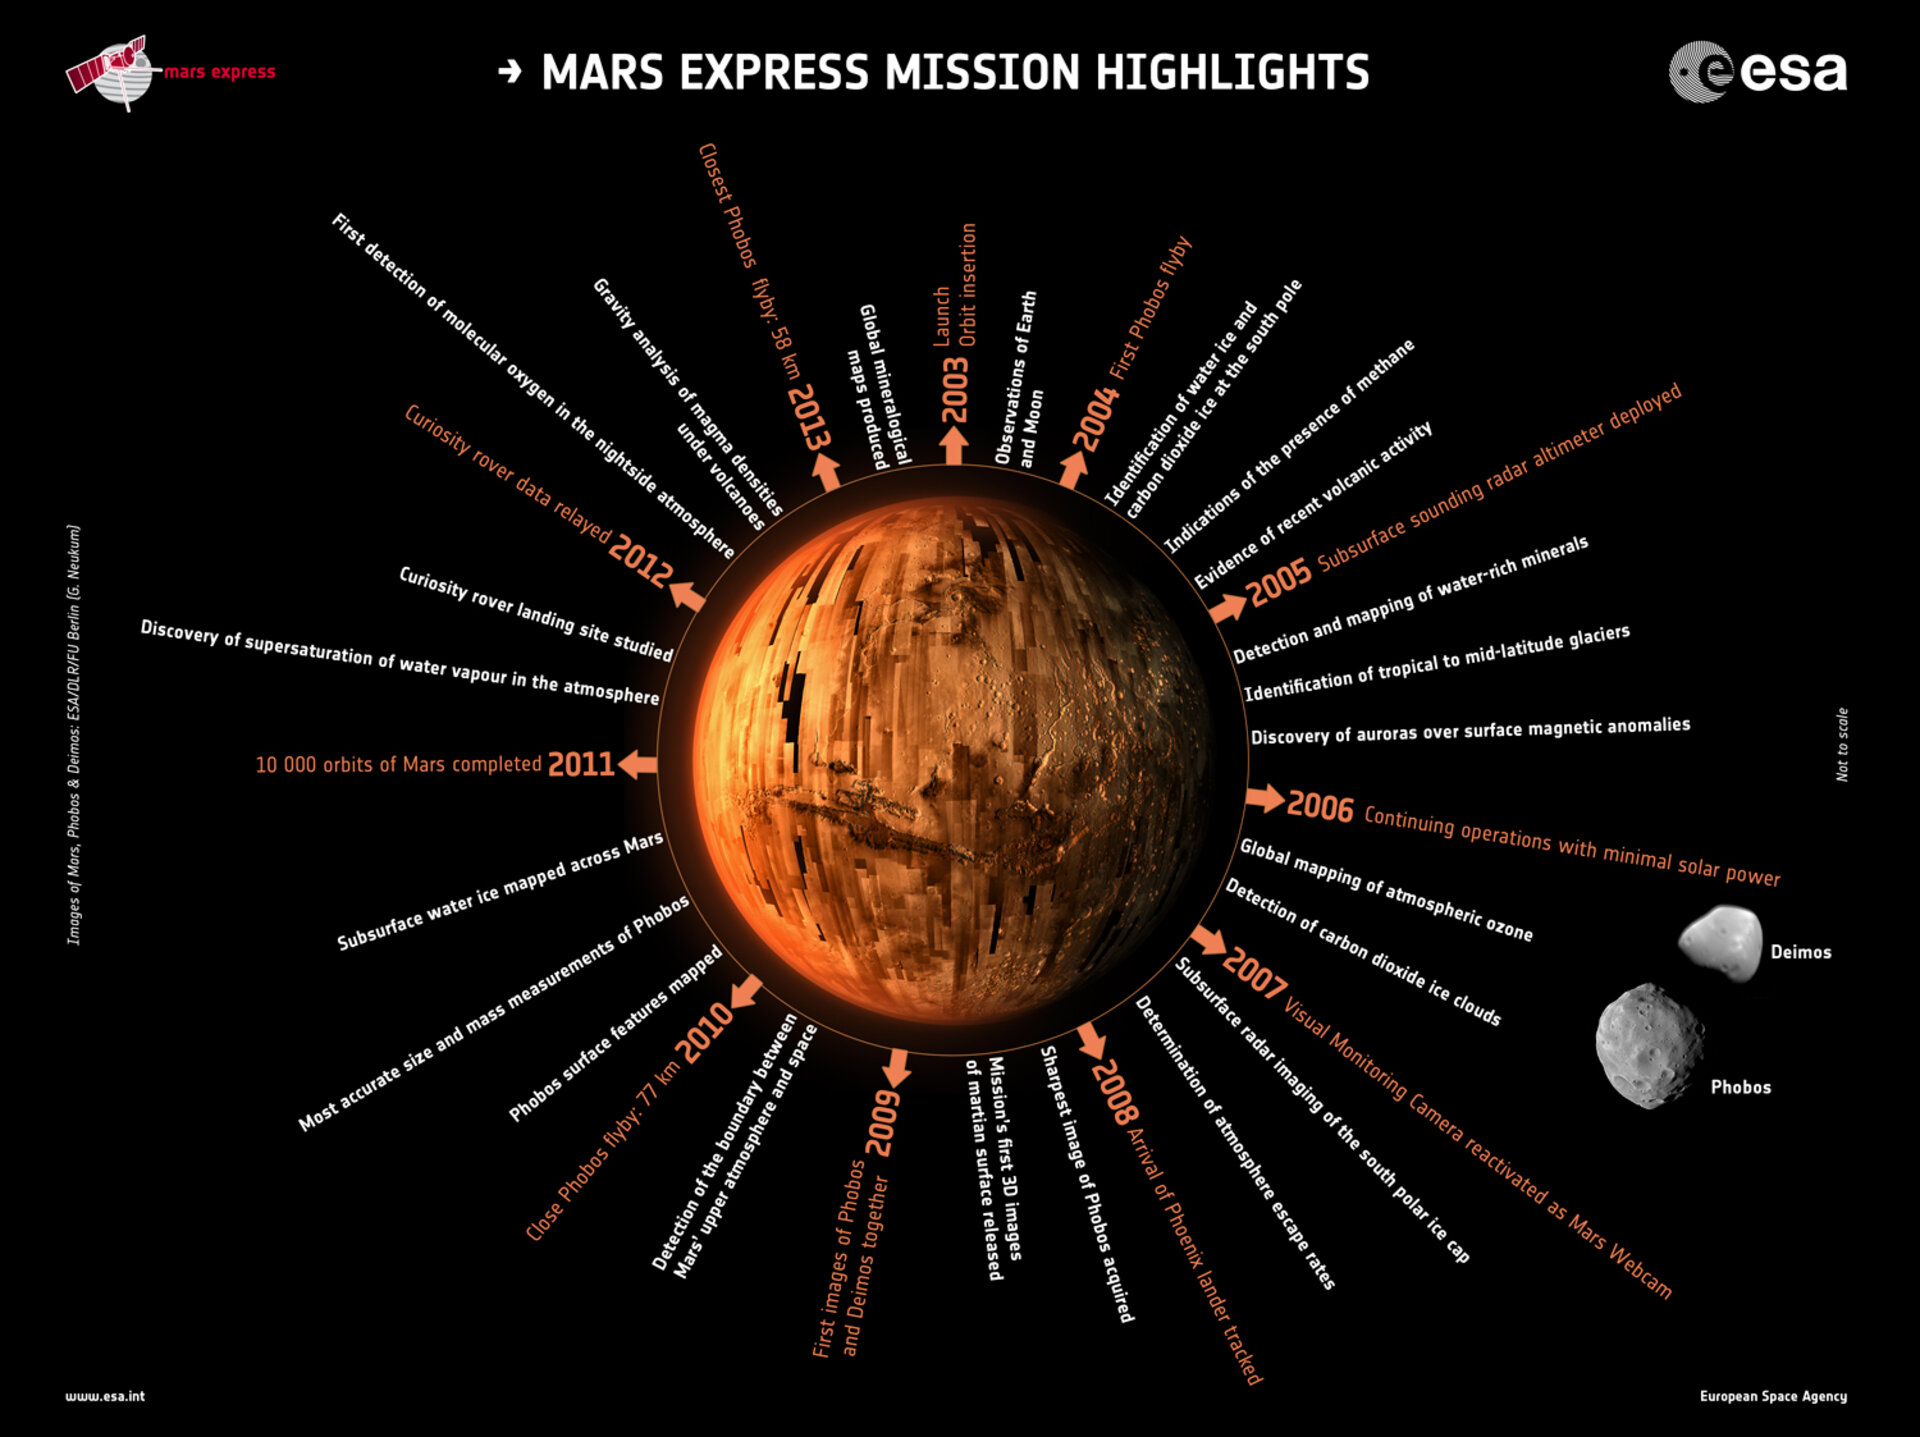 Mars Express mission highlights